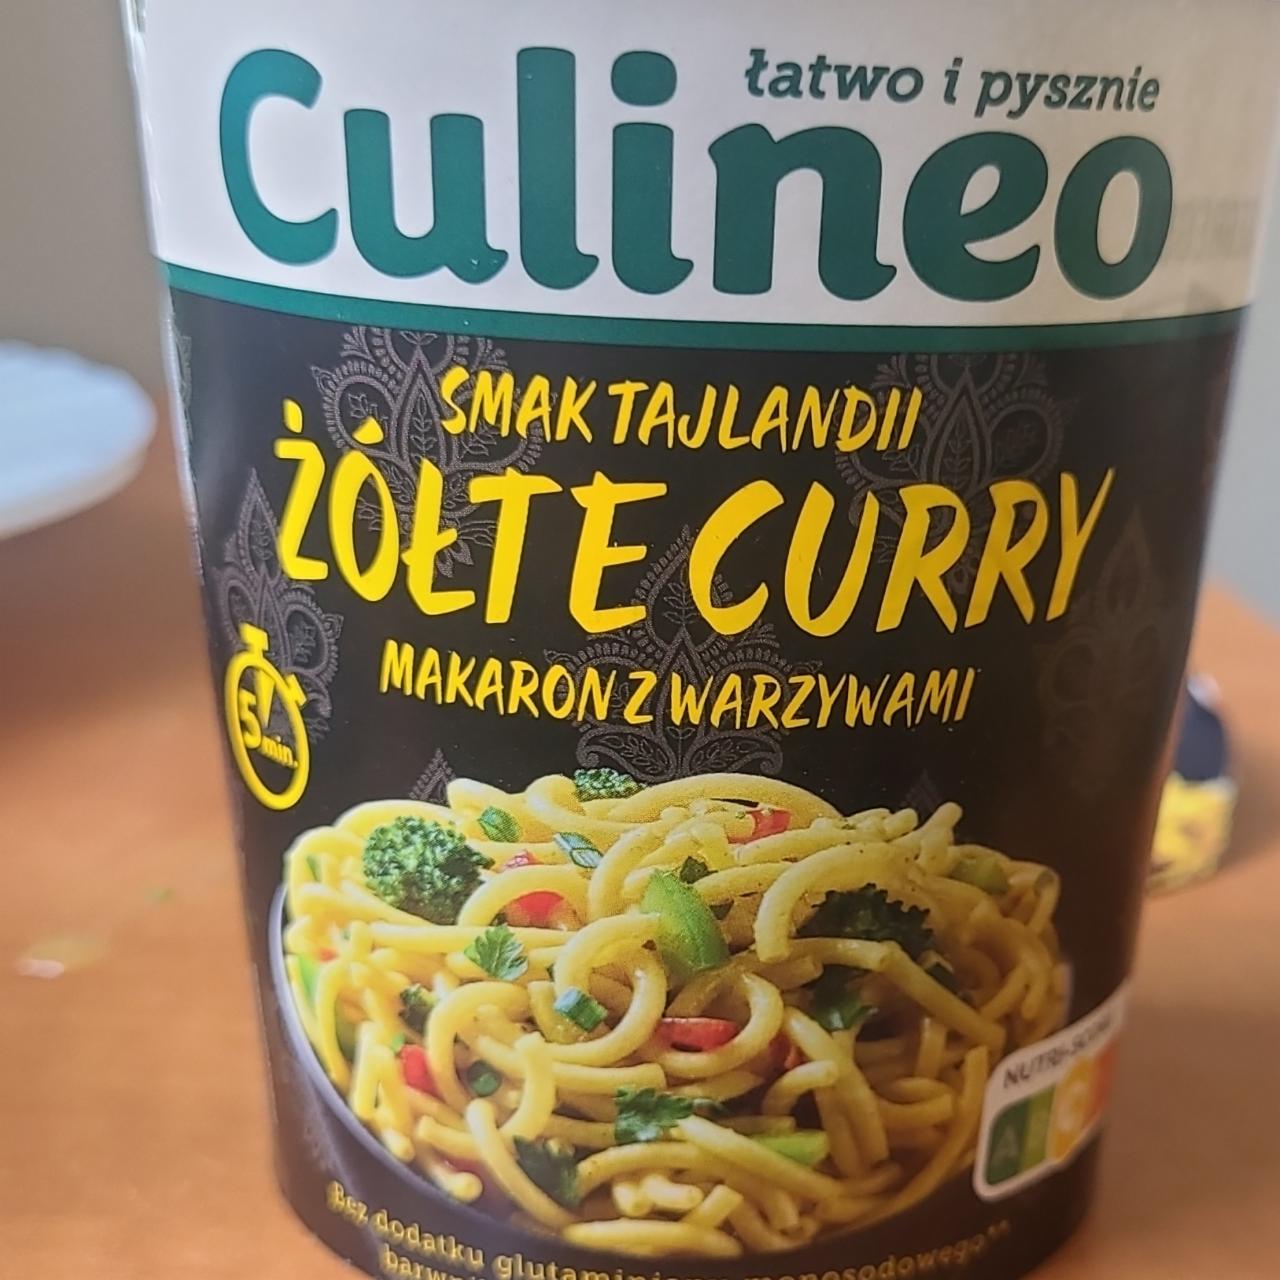 Фото - Zółte curry Culineo